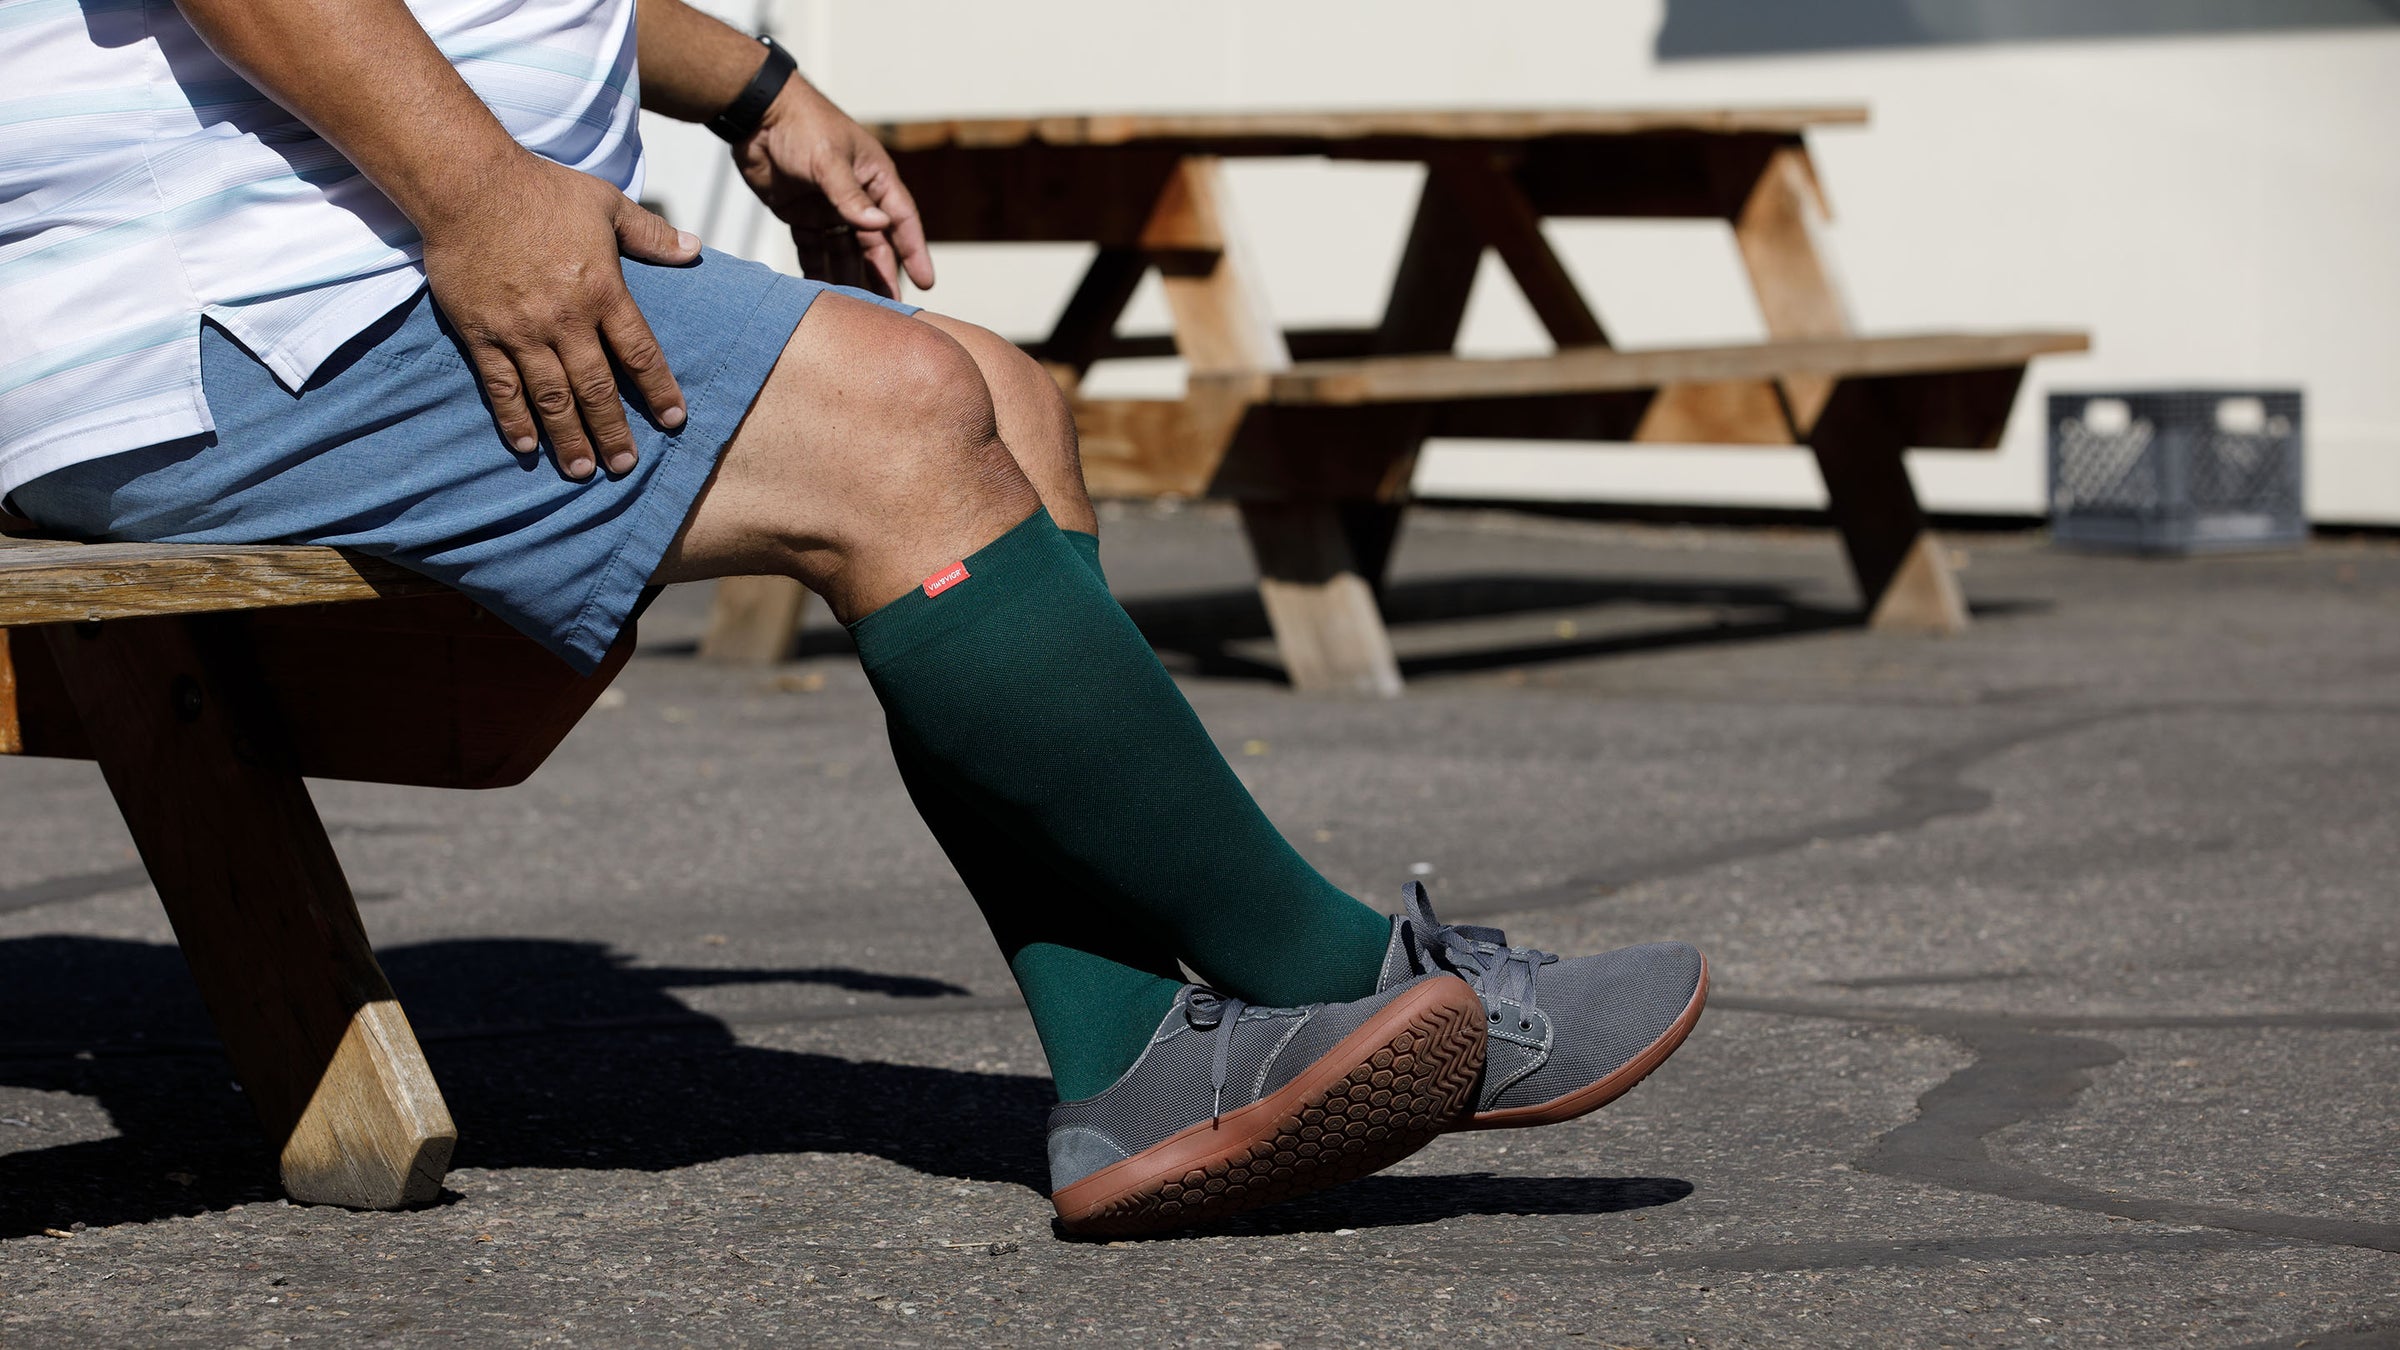 Men's Wide Calf Compression Socks - Reduce Leg Swelling